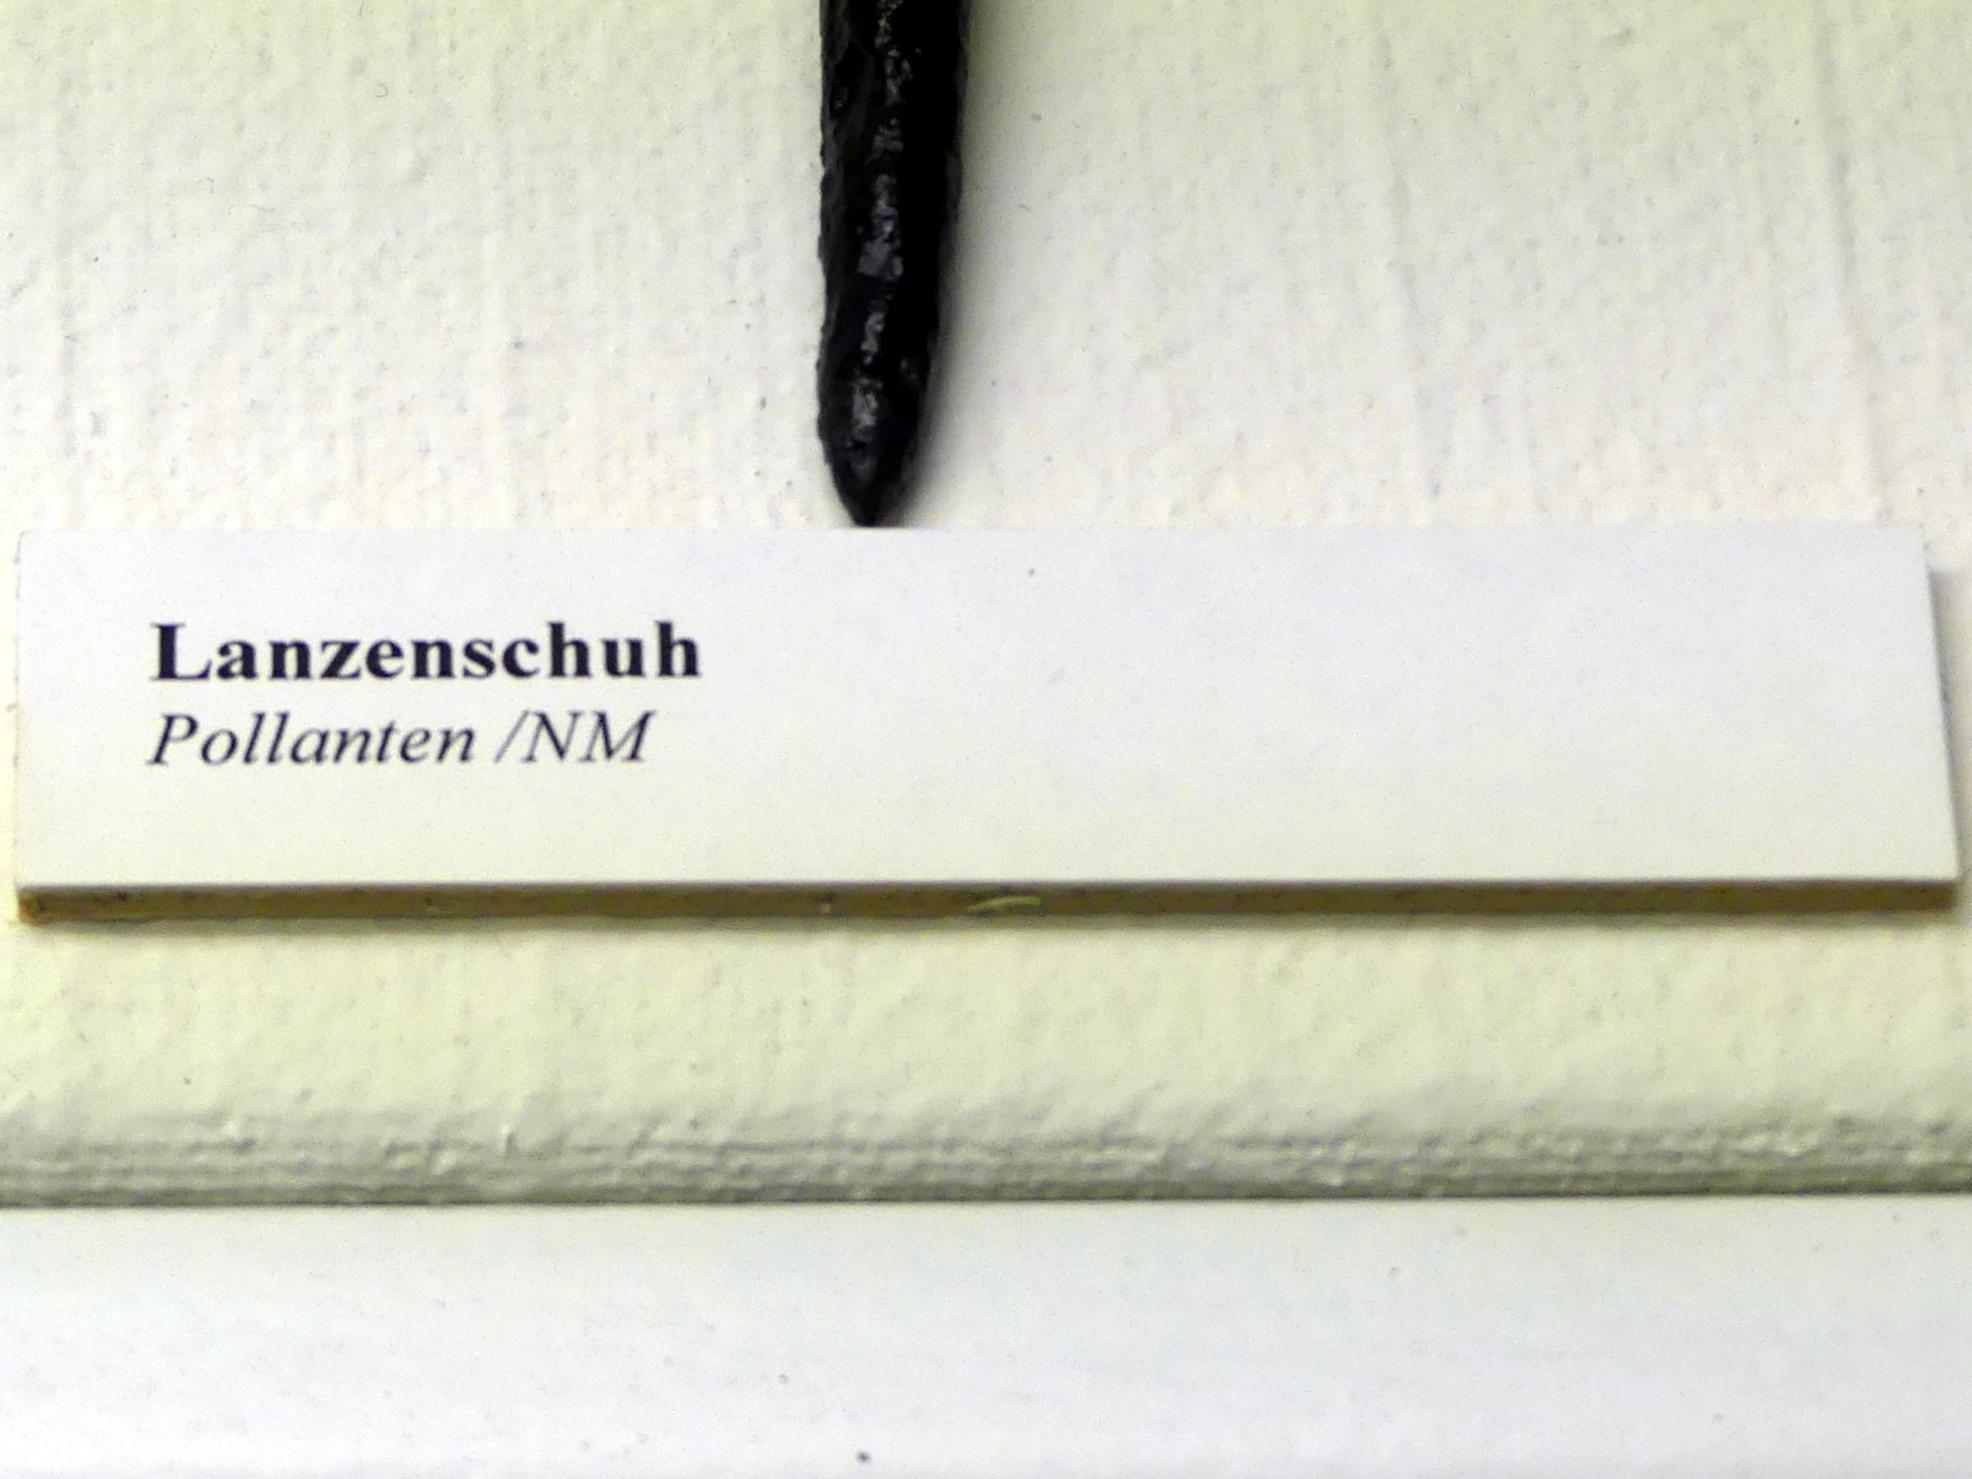 Lanzenschuh, Spätlatènezeit D, 700 - 100 v. Chr., Bild 2/2